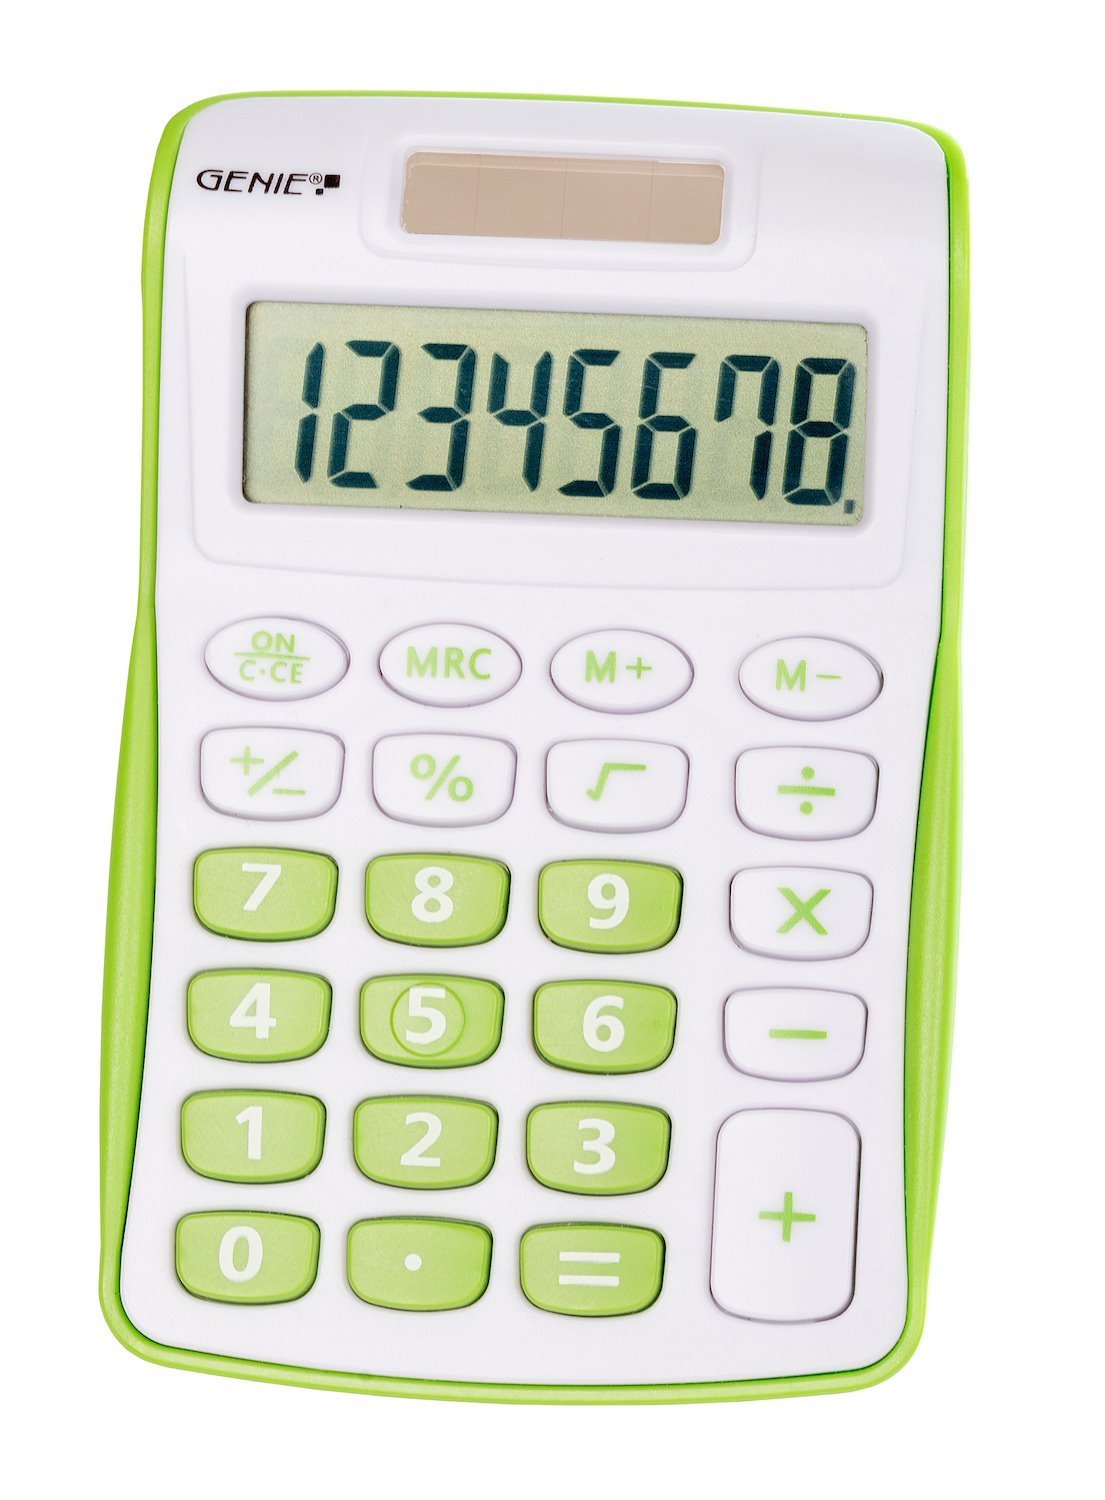 Genius Genie 120 G Calculator Pocket Display Green White (Genie 120B 8 Digit Pocket Calculator Green - 12496)